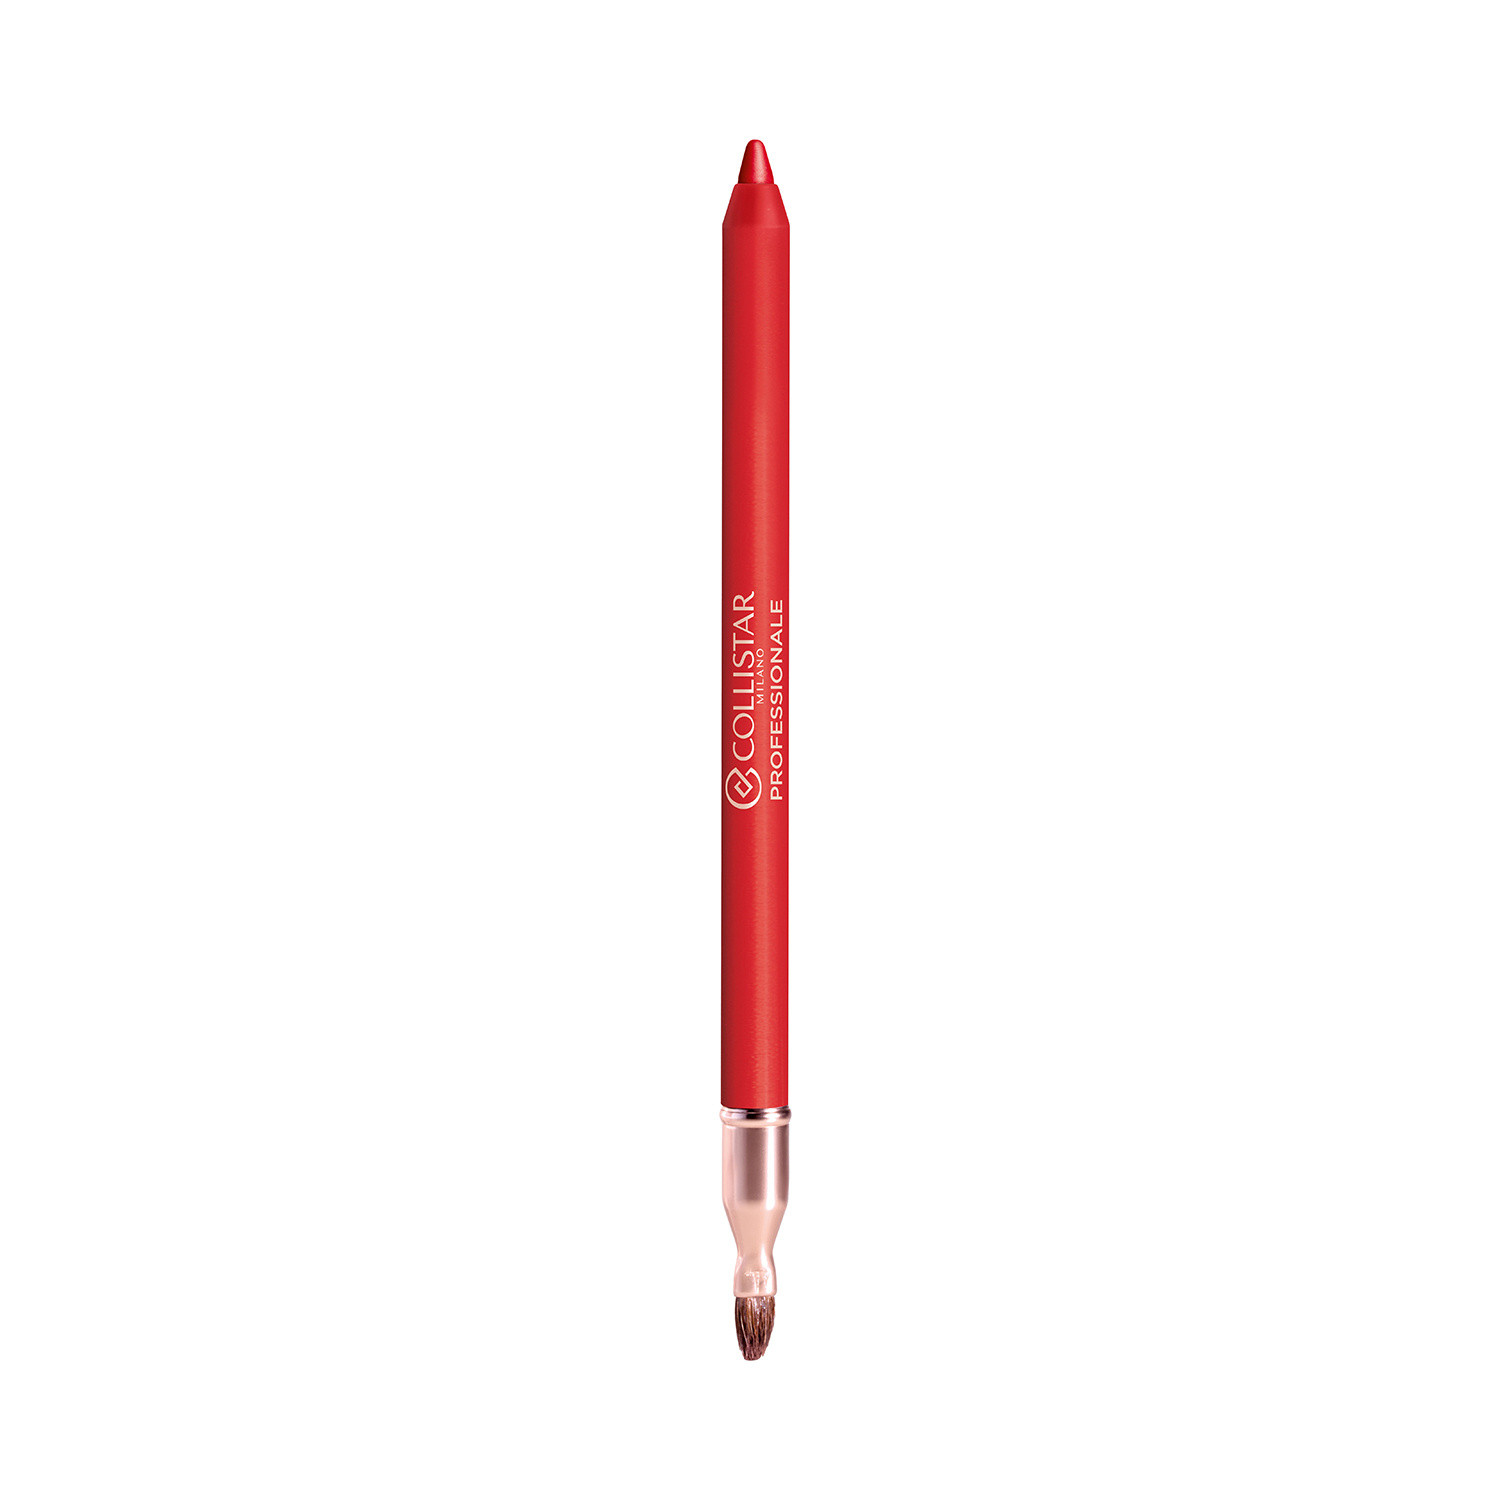 Collistar - Professionale matita labbra lunga durata  7 Rosso Ciliegia, Rosso ciliegia, large image number 1